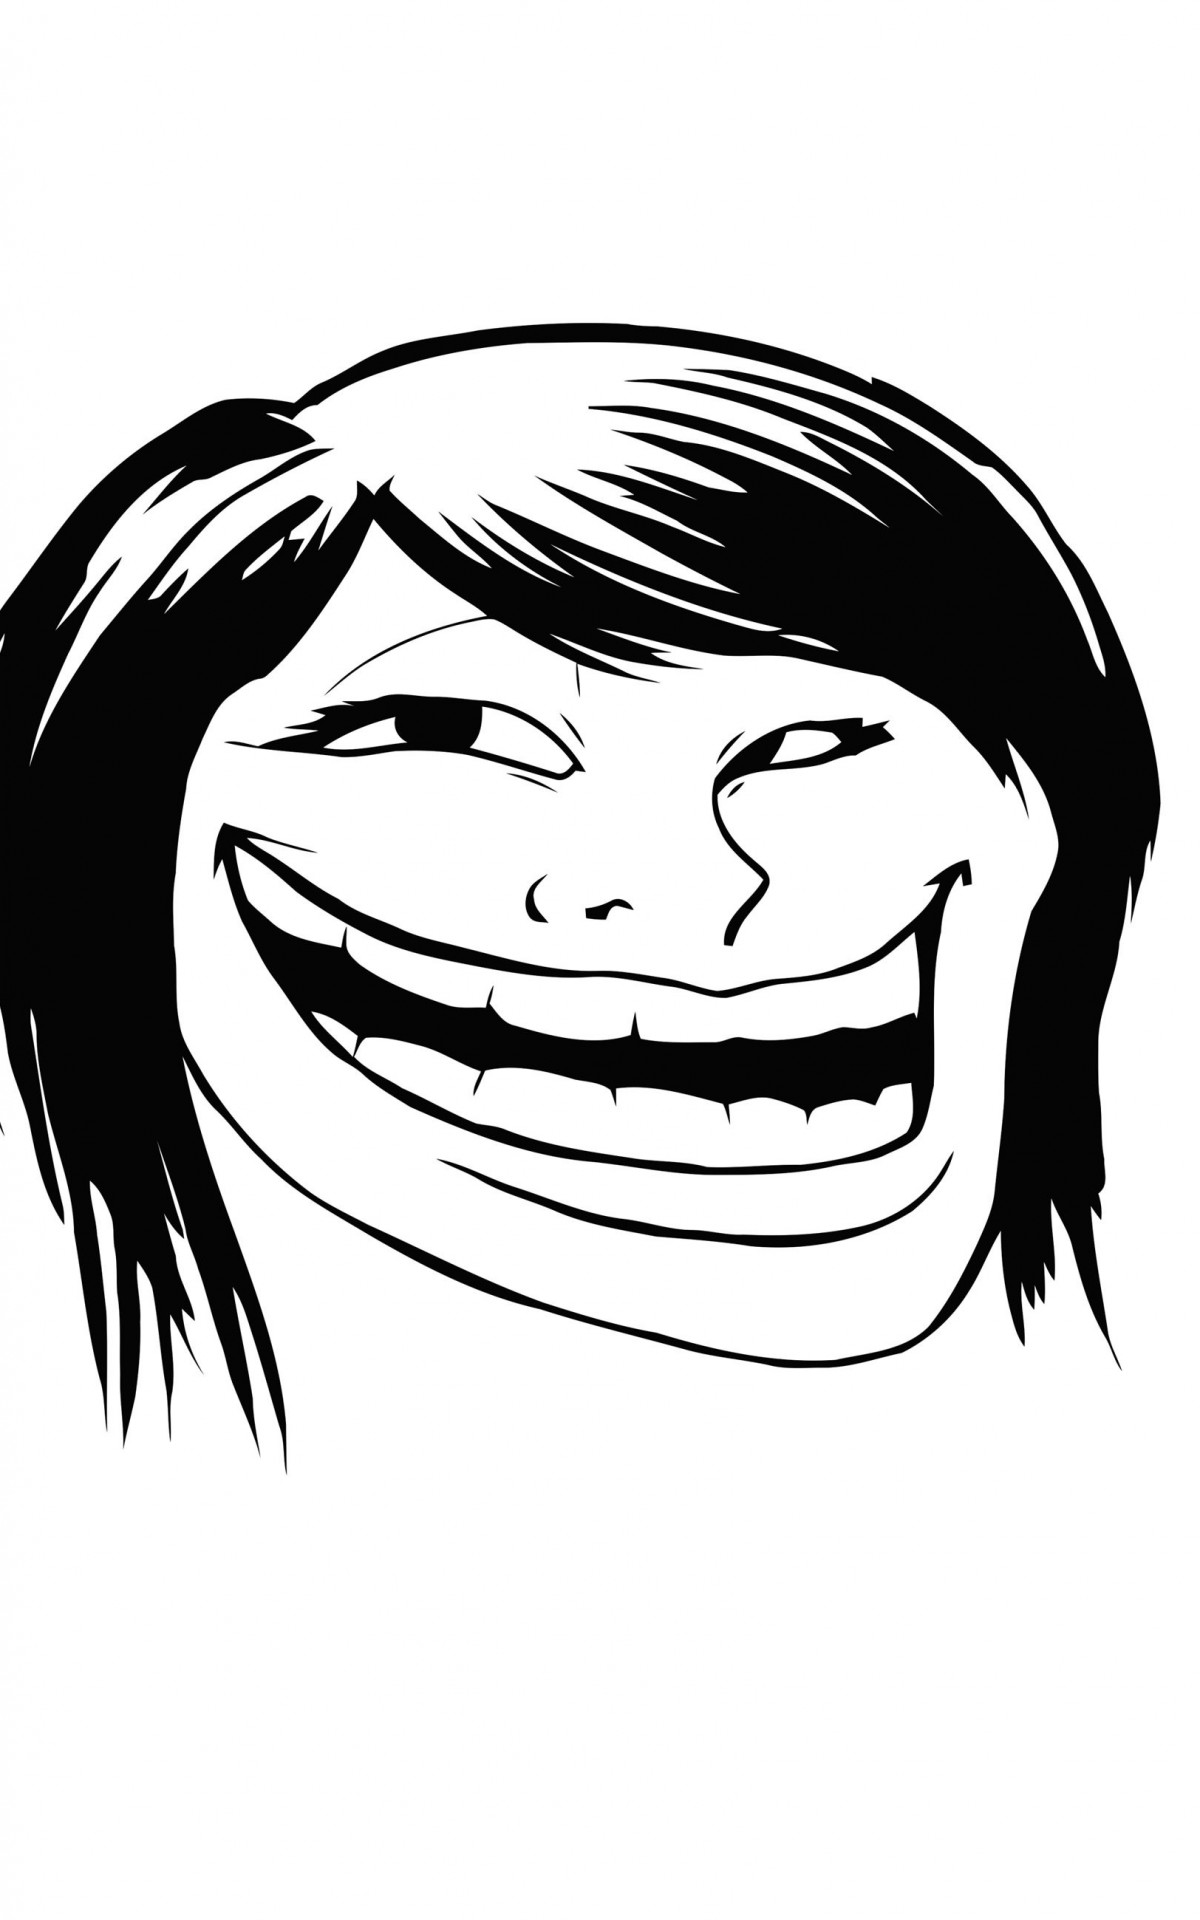 Female Troll Face Meme Wallpaper for Amazon Kindle Fire HDX